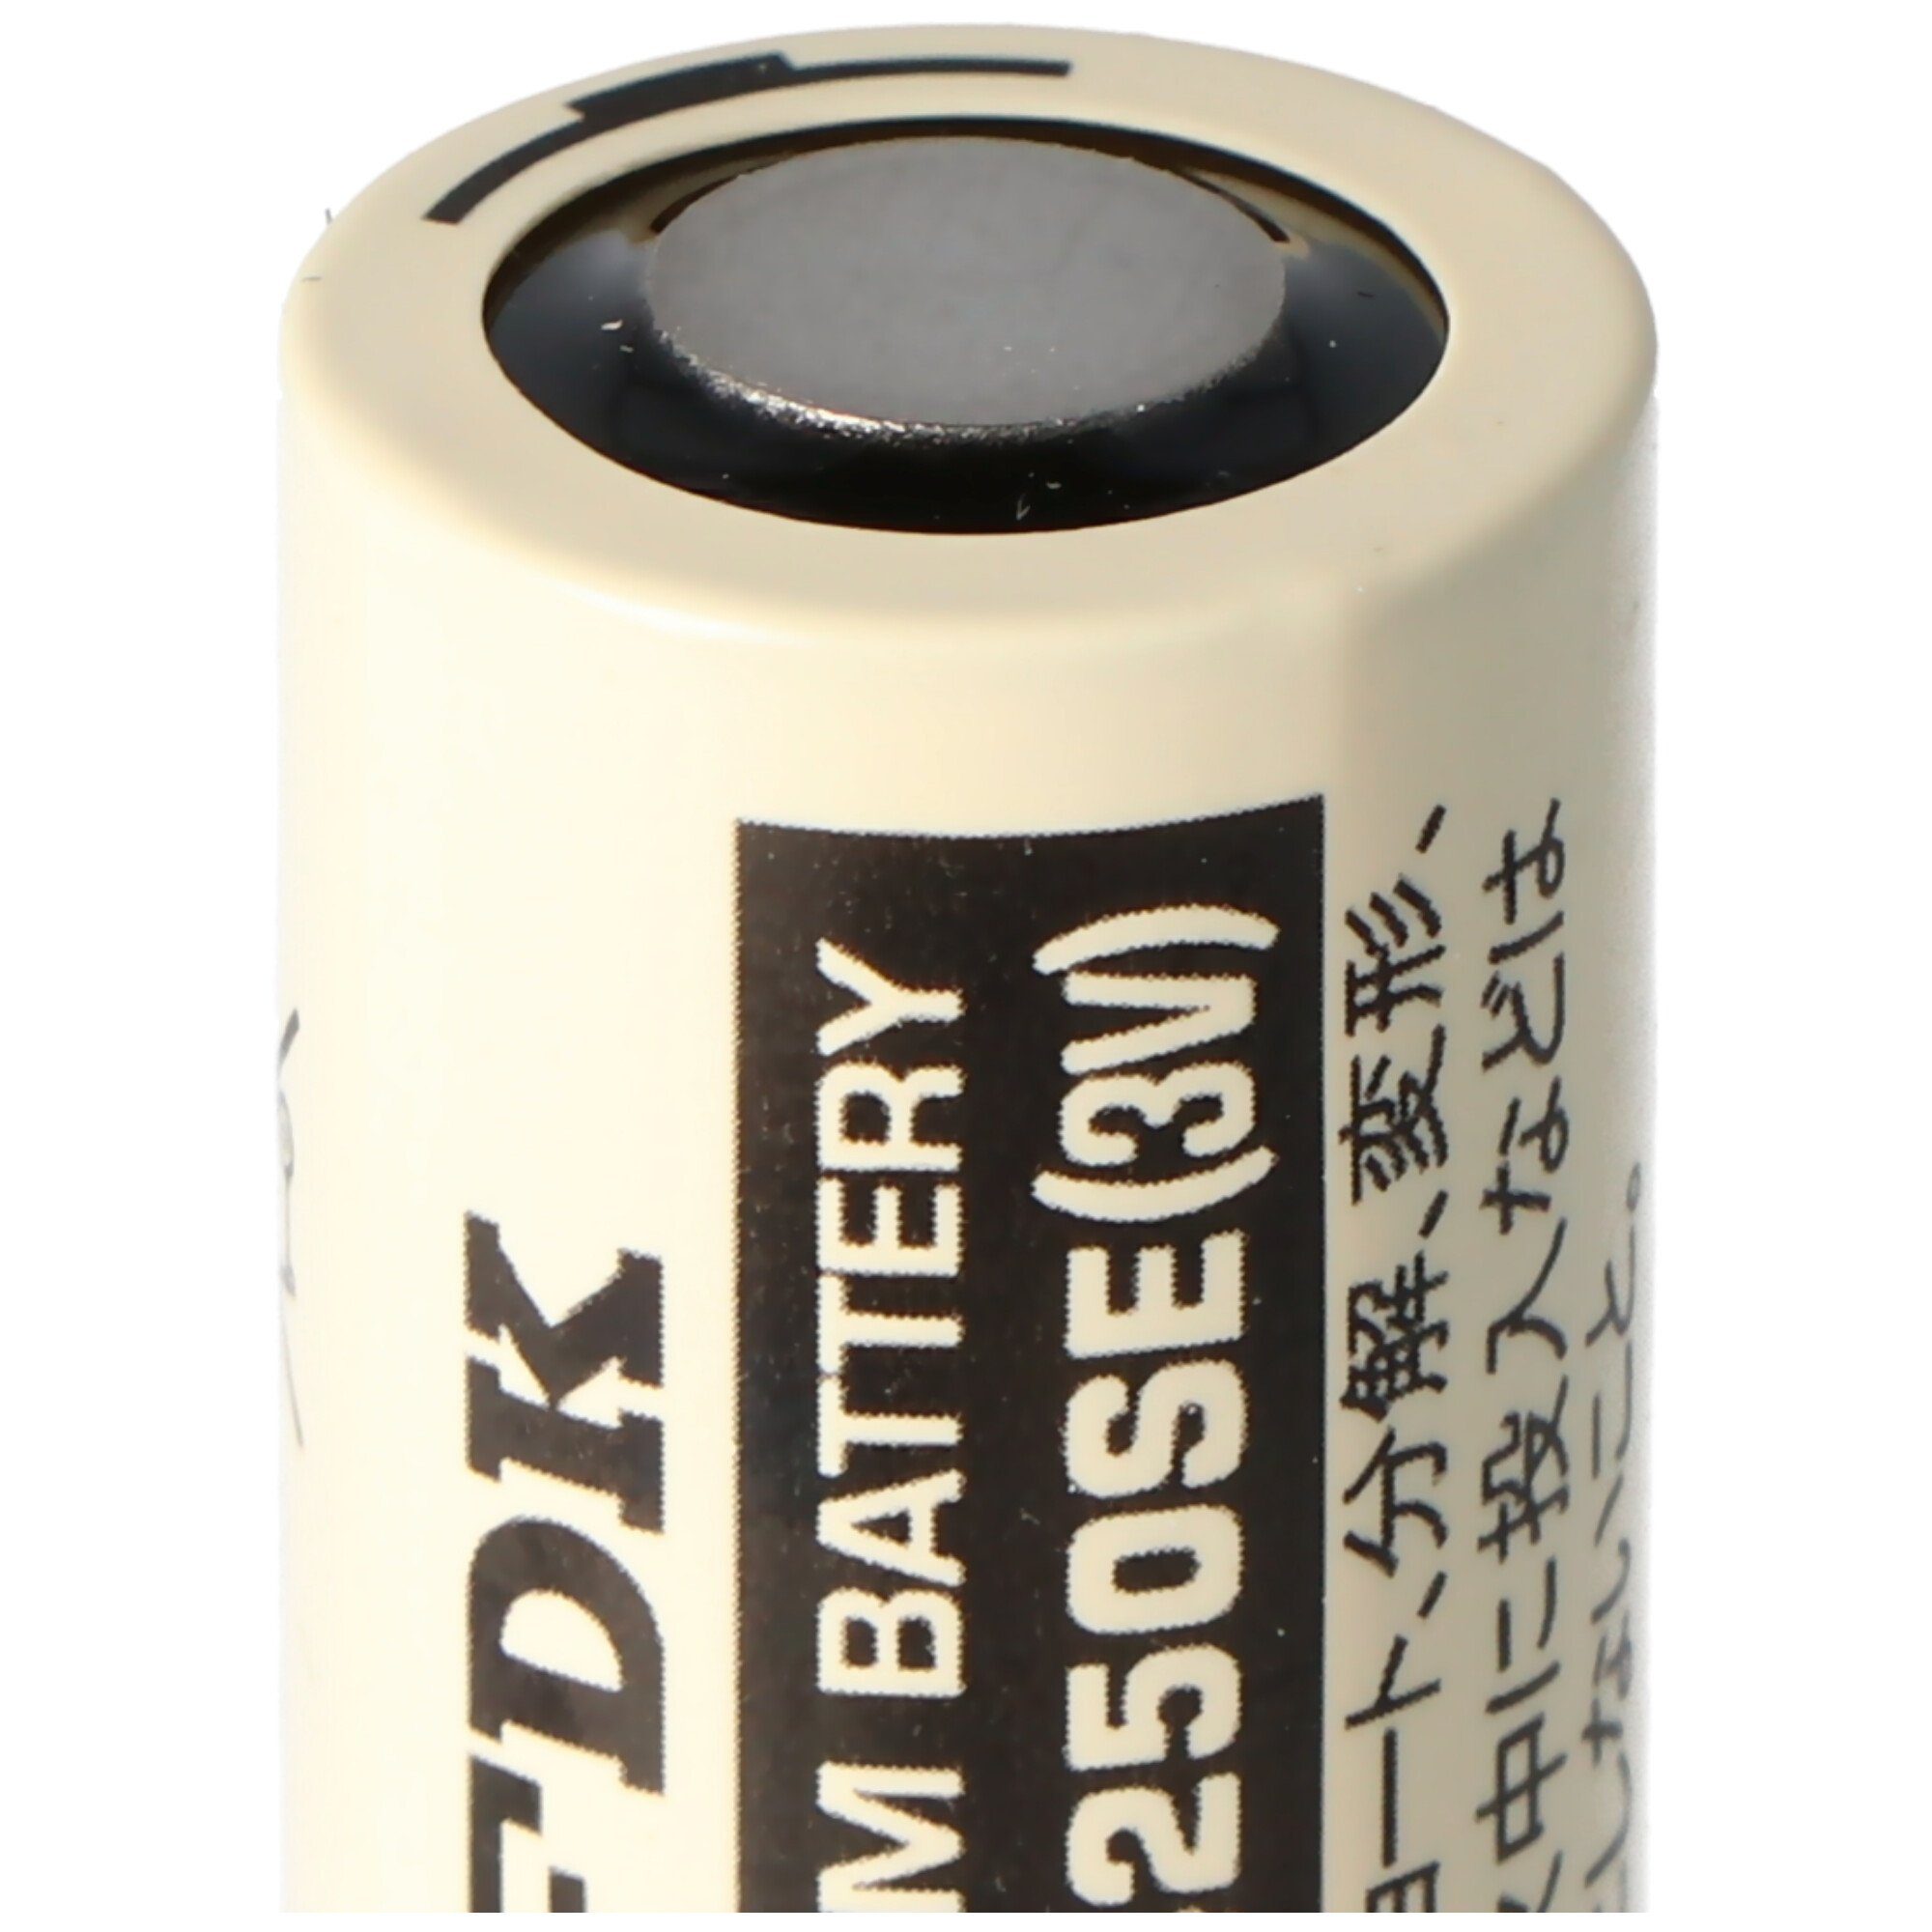 CR14250 V) SE Sanyo Batterie, IEC (3,0 1/2AA, Sanyo Batterie CR14250 CR14250 FDK Lithium